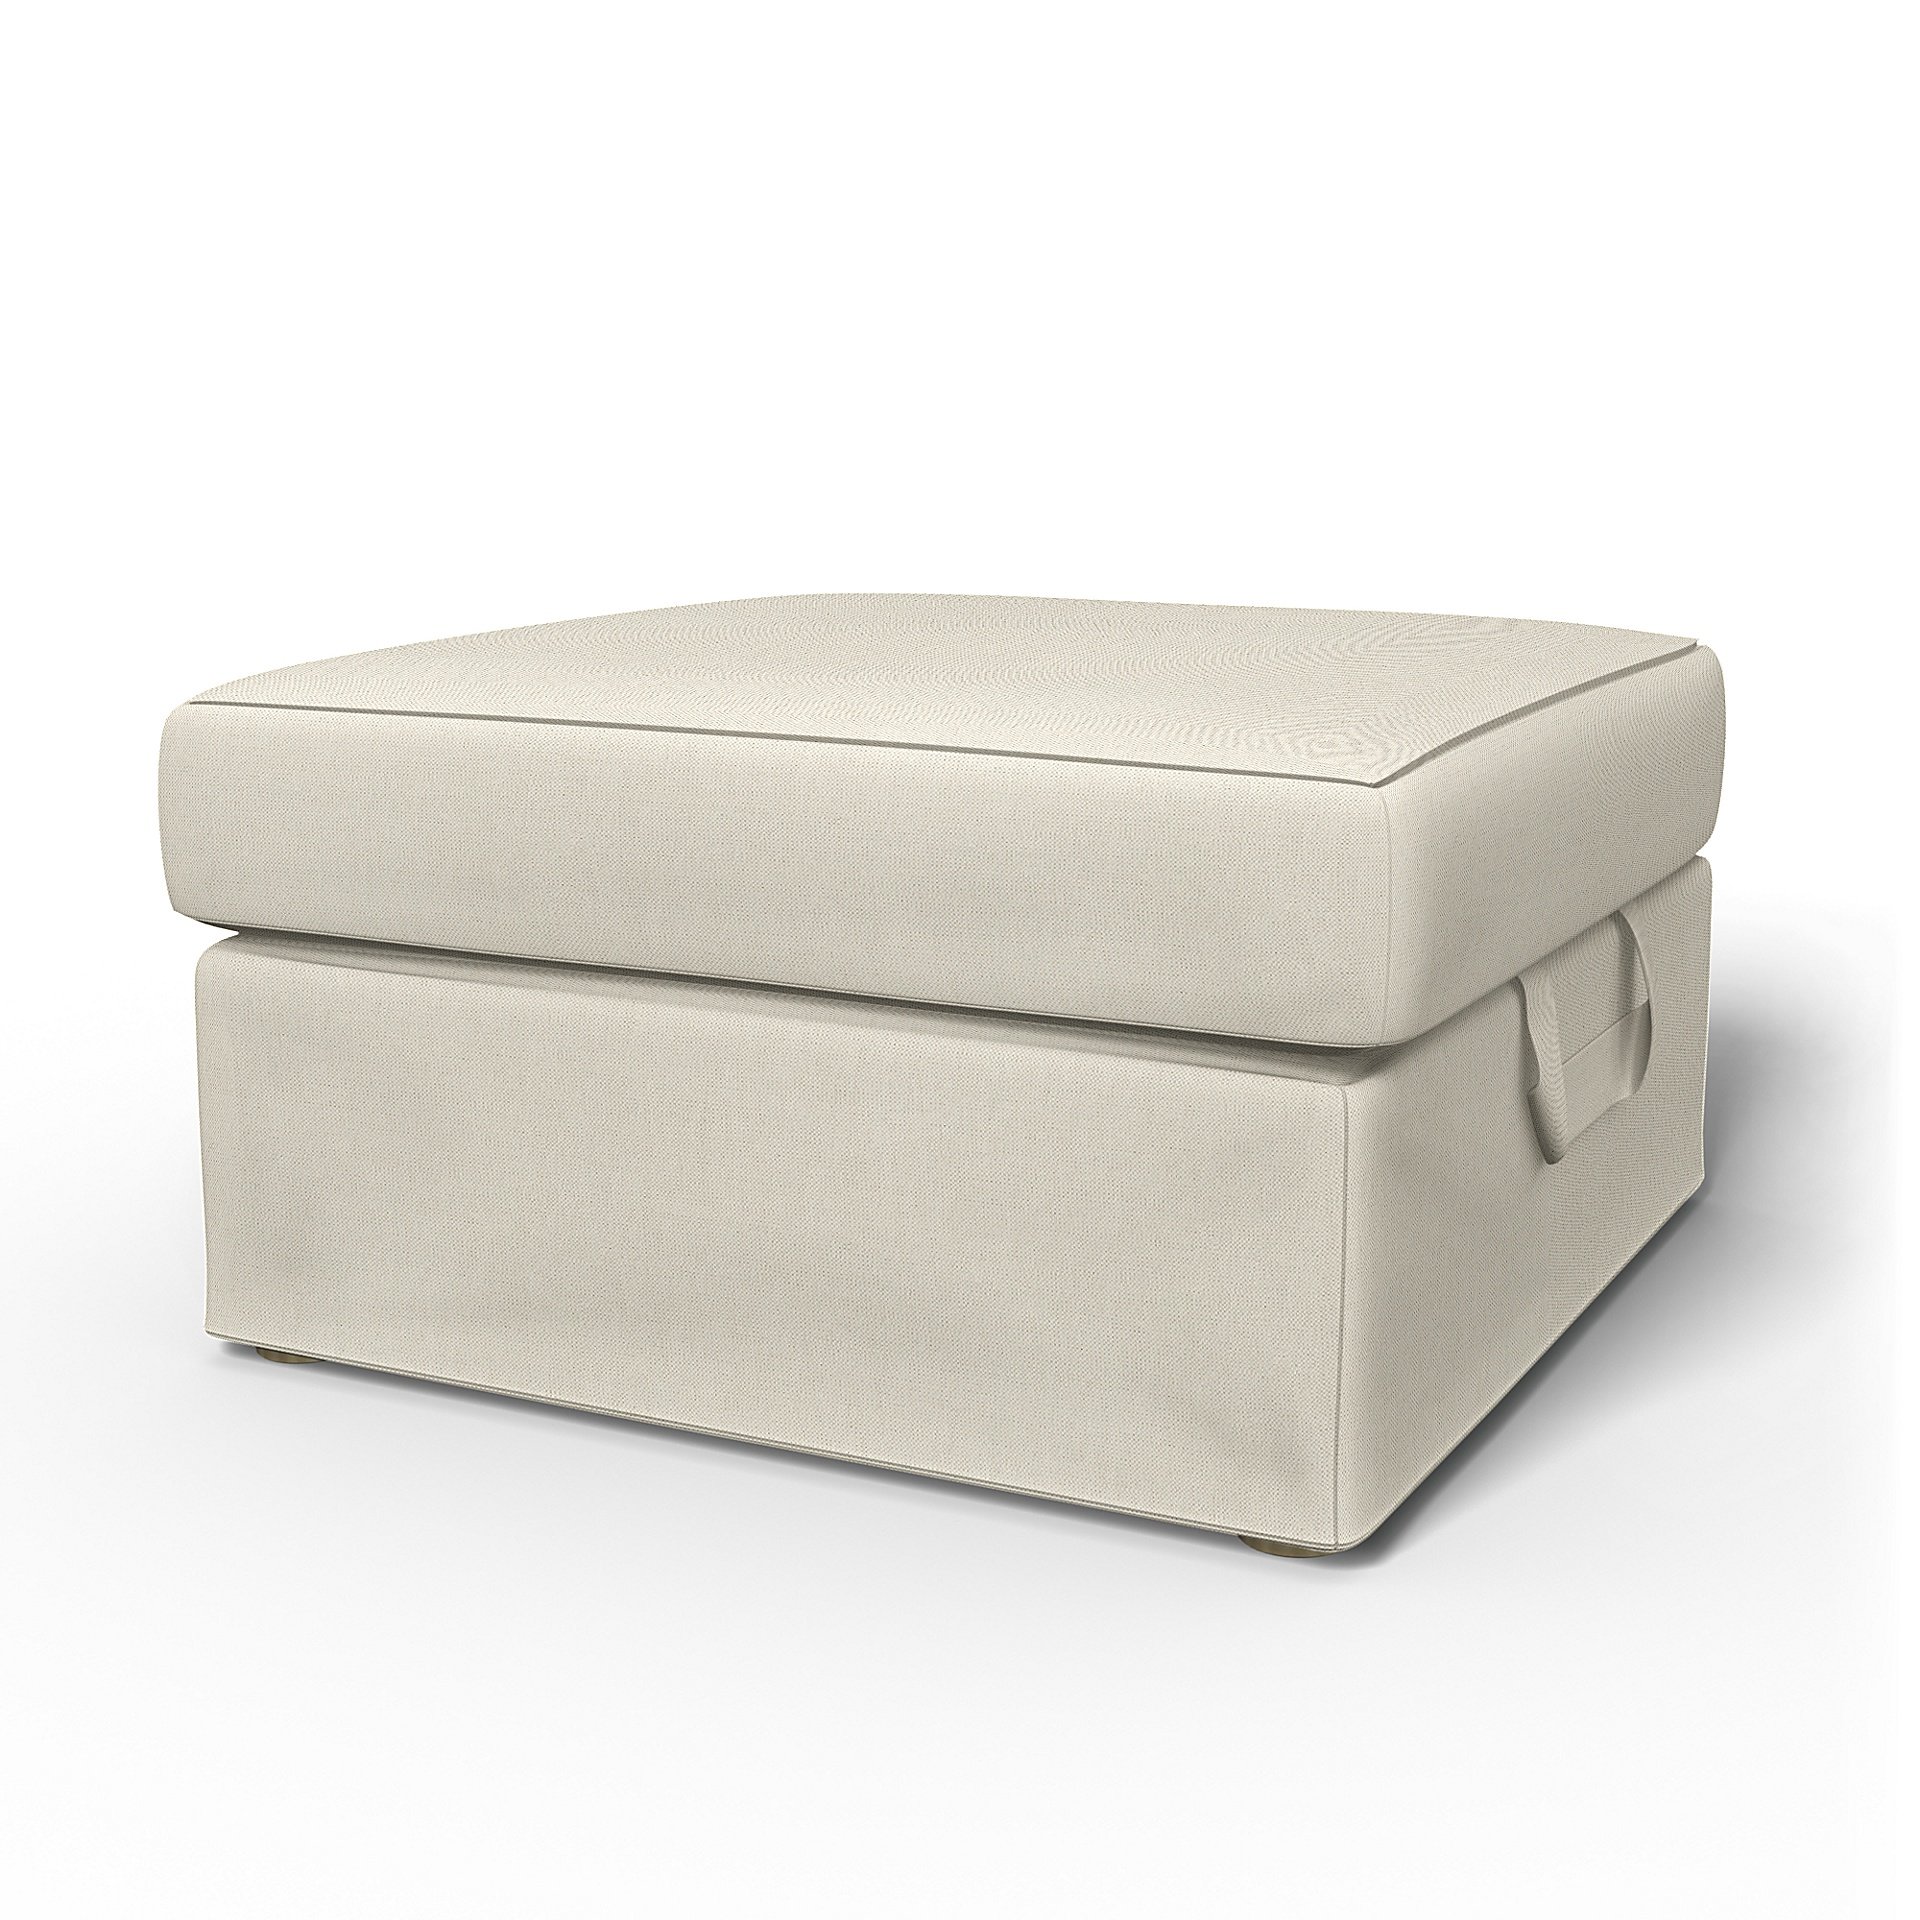 IKEA - Tomelilla Foto Footstool Cover, Unbleached, Linen - Bemz